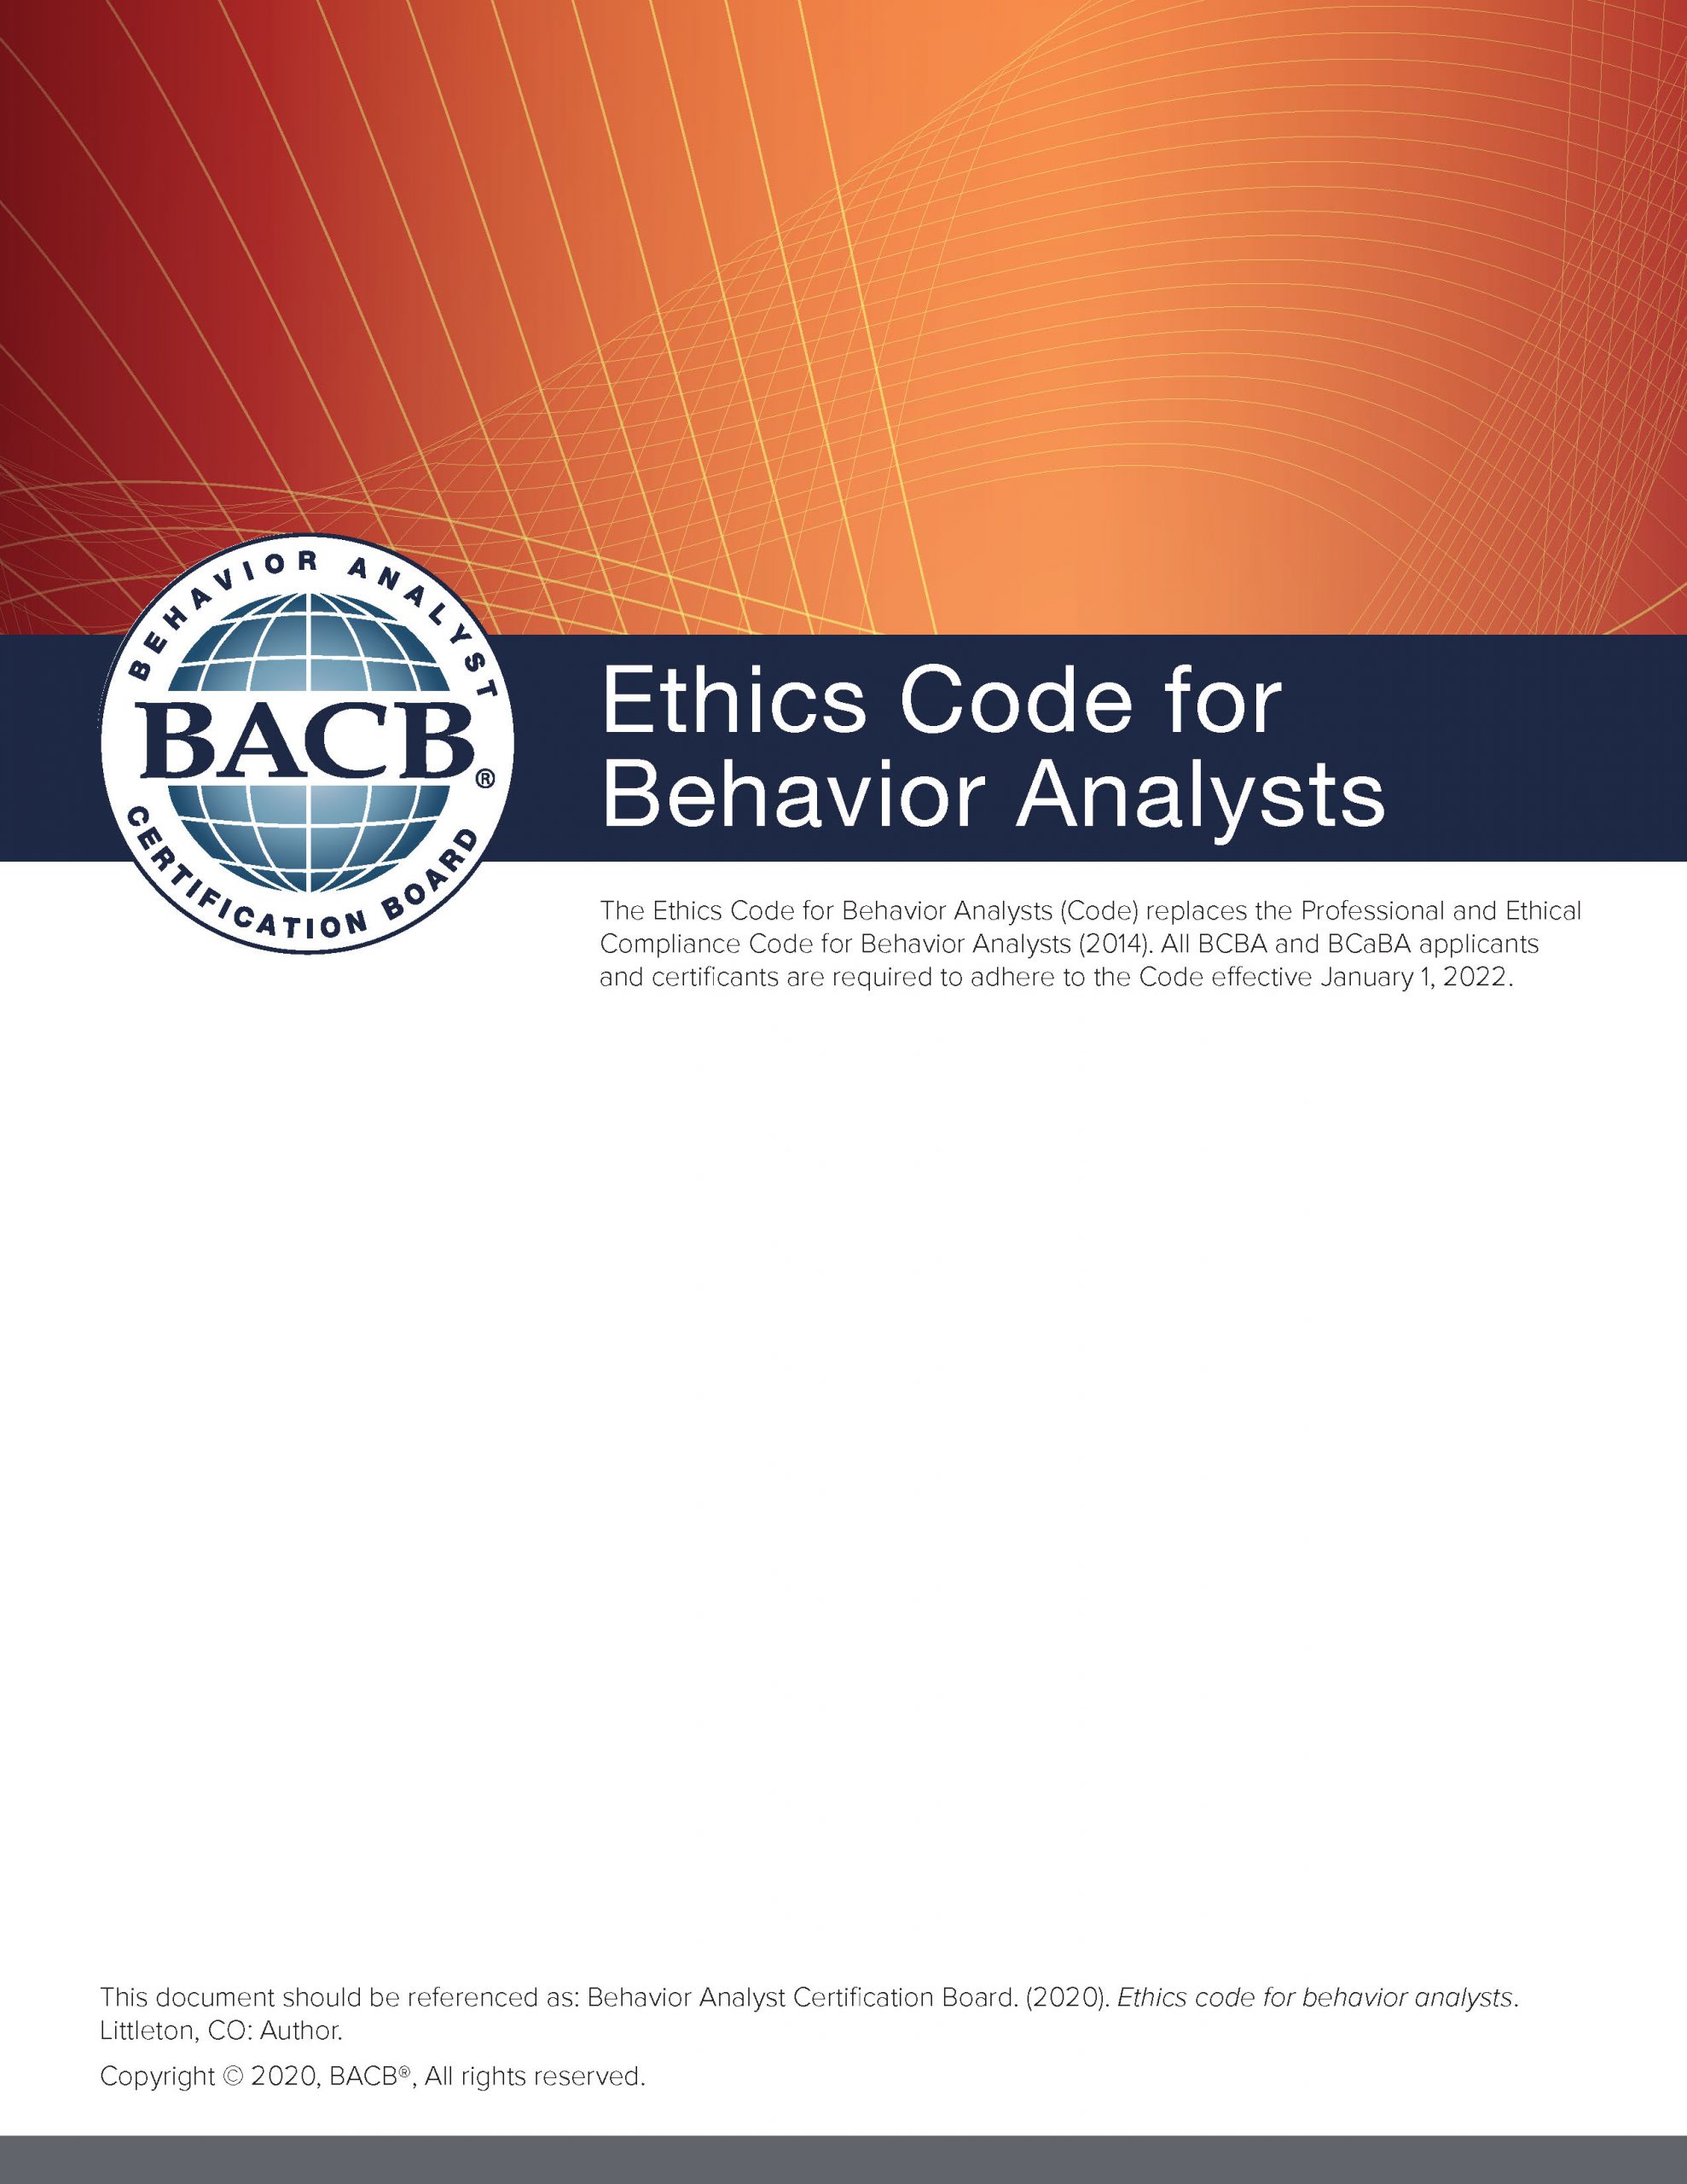 Ethics Code for Behavior Analysts